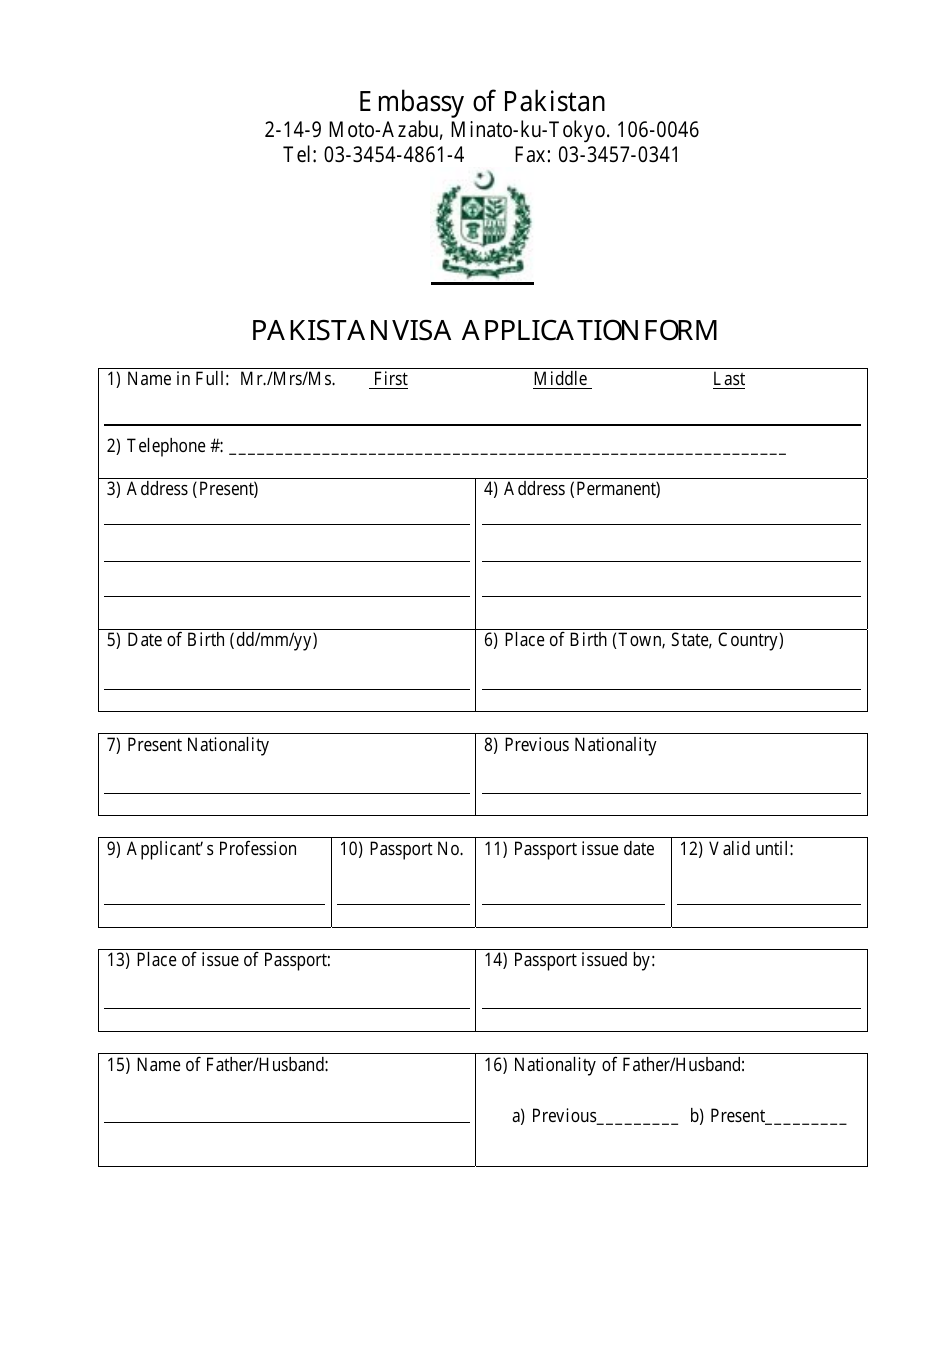 Pakistan Visa Application Form - Embassy of Pakistan - Tokyo, Japan, Page 1